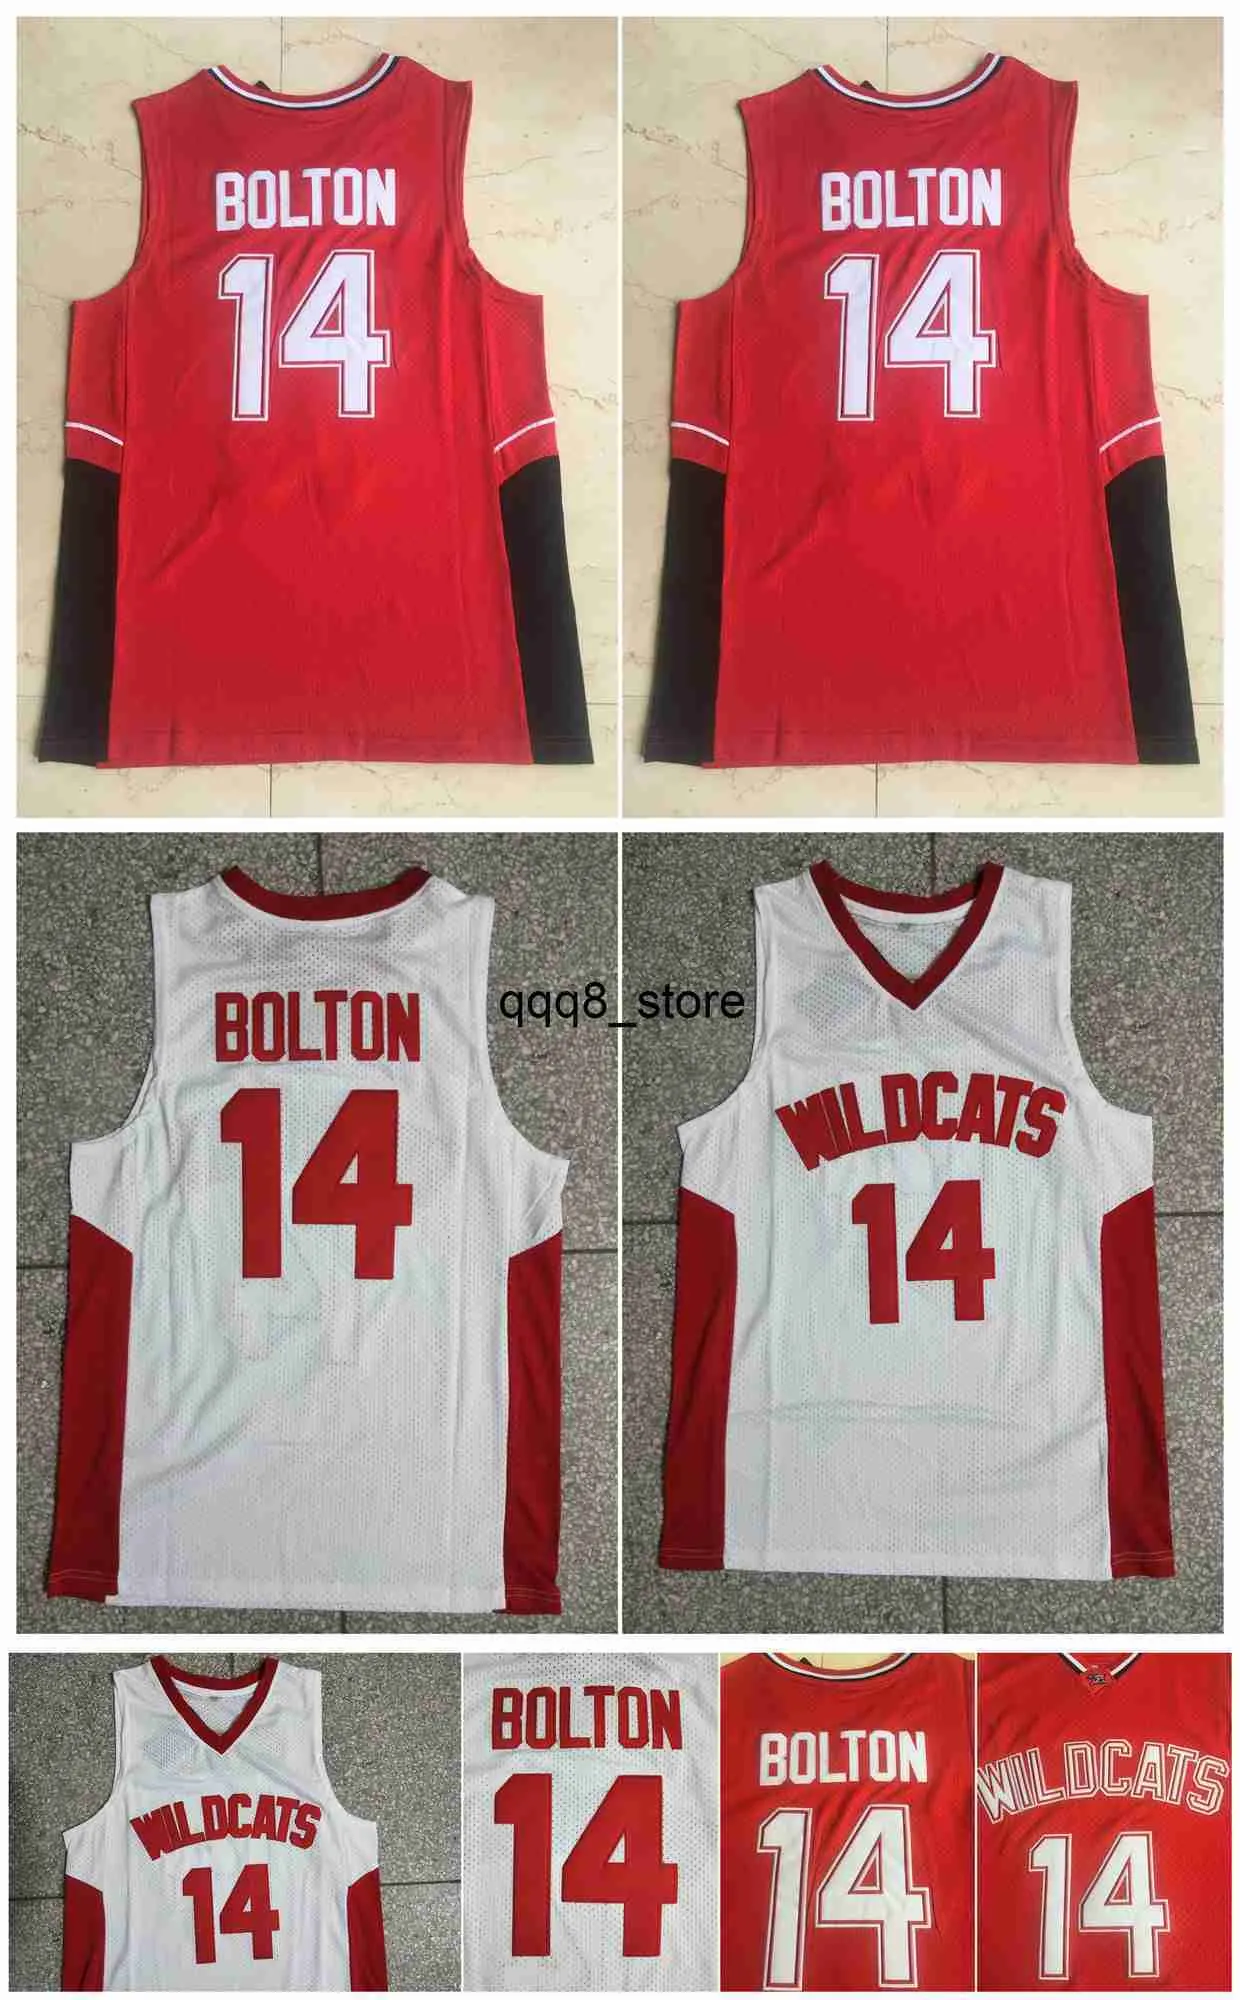 qqq8 Troy Bolton # 14 High School Wildcats NCAA College Basketball Maglie Crestwood High School Knights Bianco Rosso Taglia S-XXL